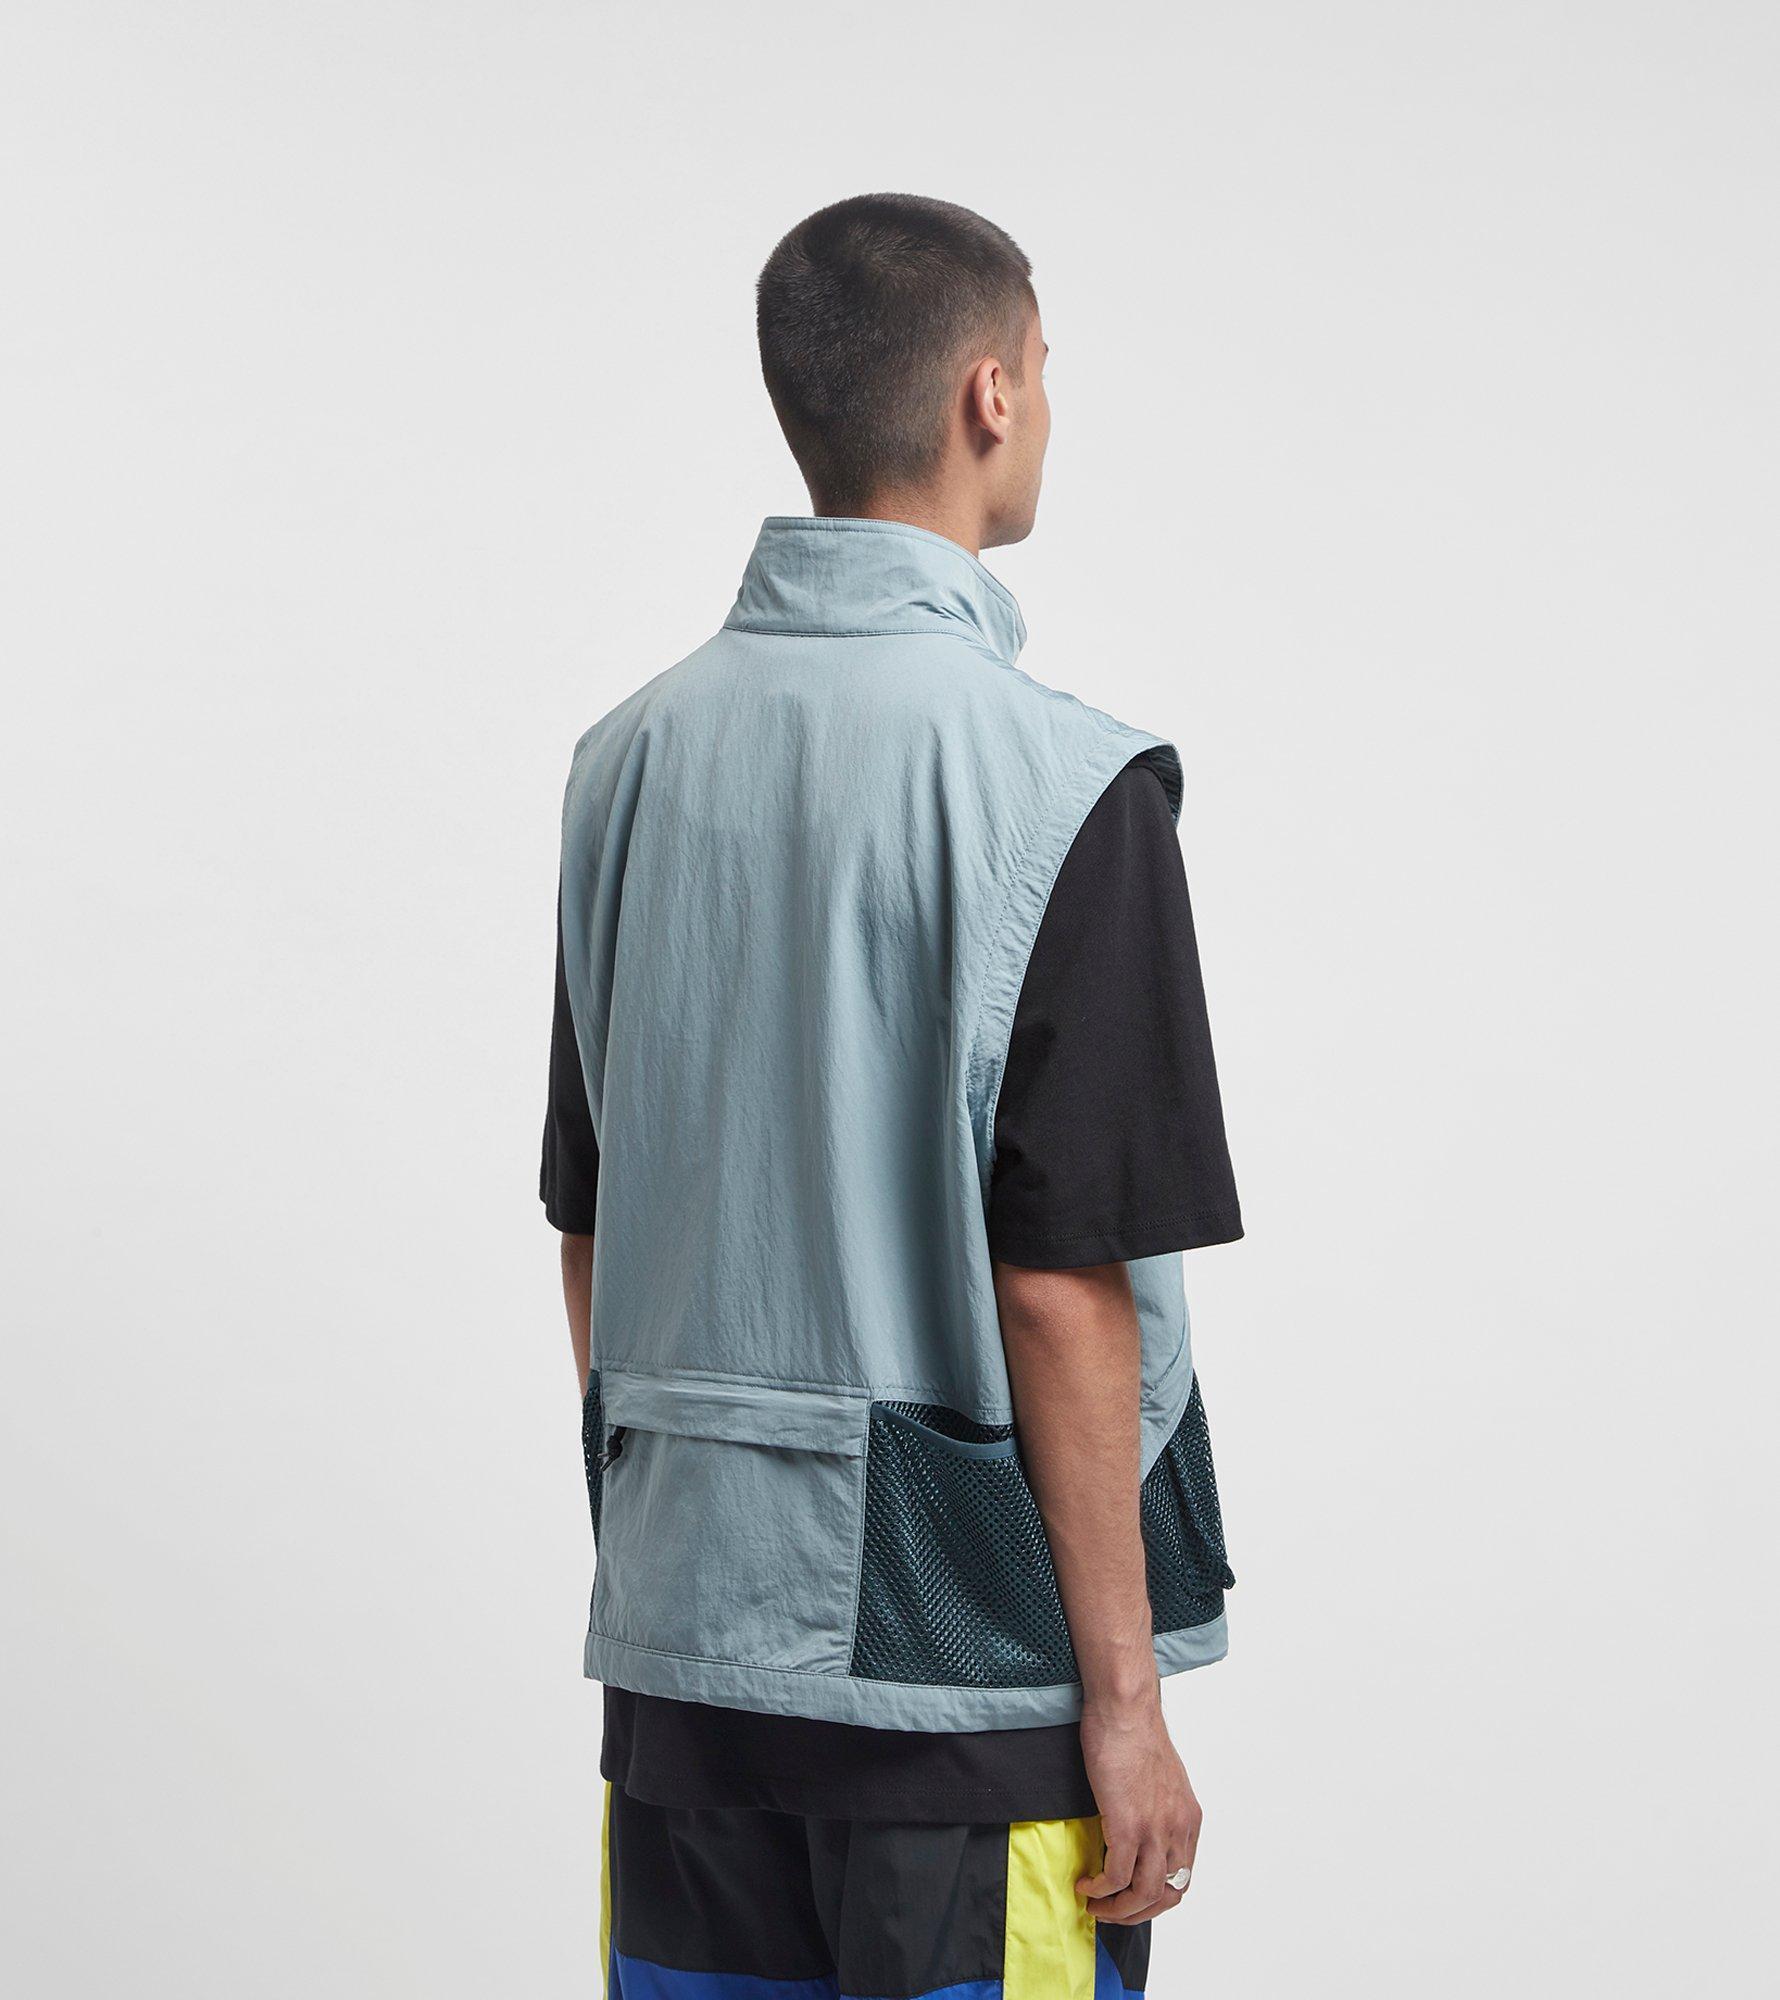 Nike Synthetic Acg Vest in Grey (Gray) for Men - Lyst